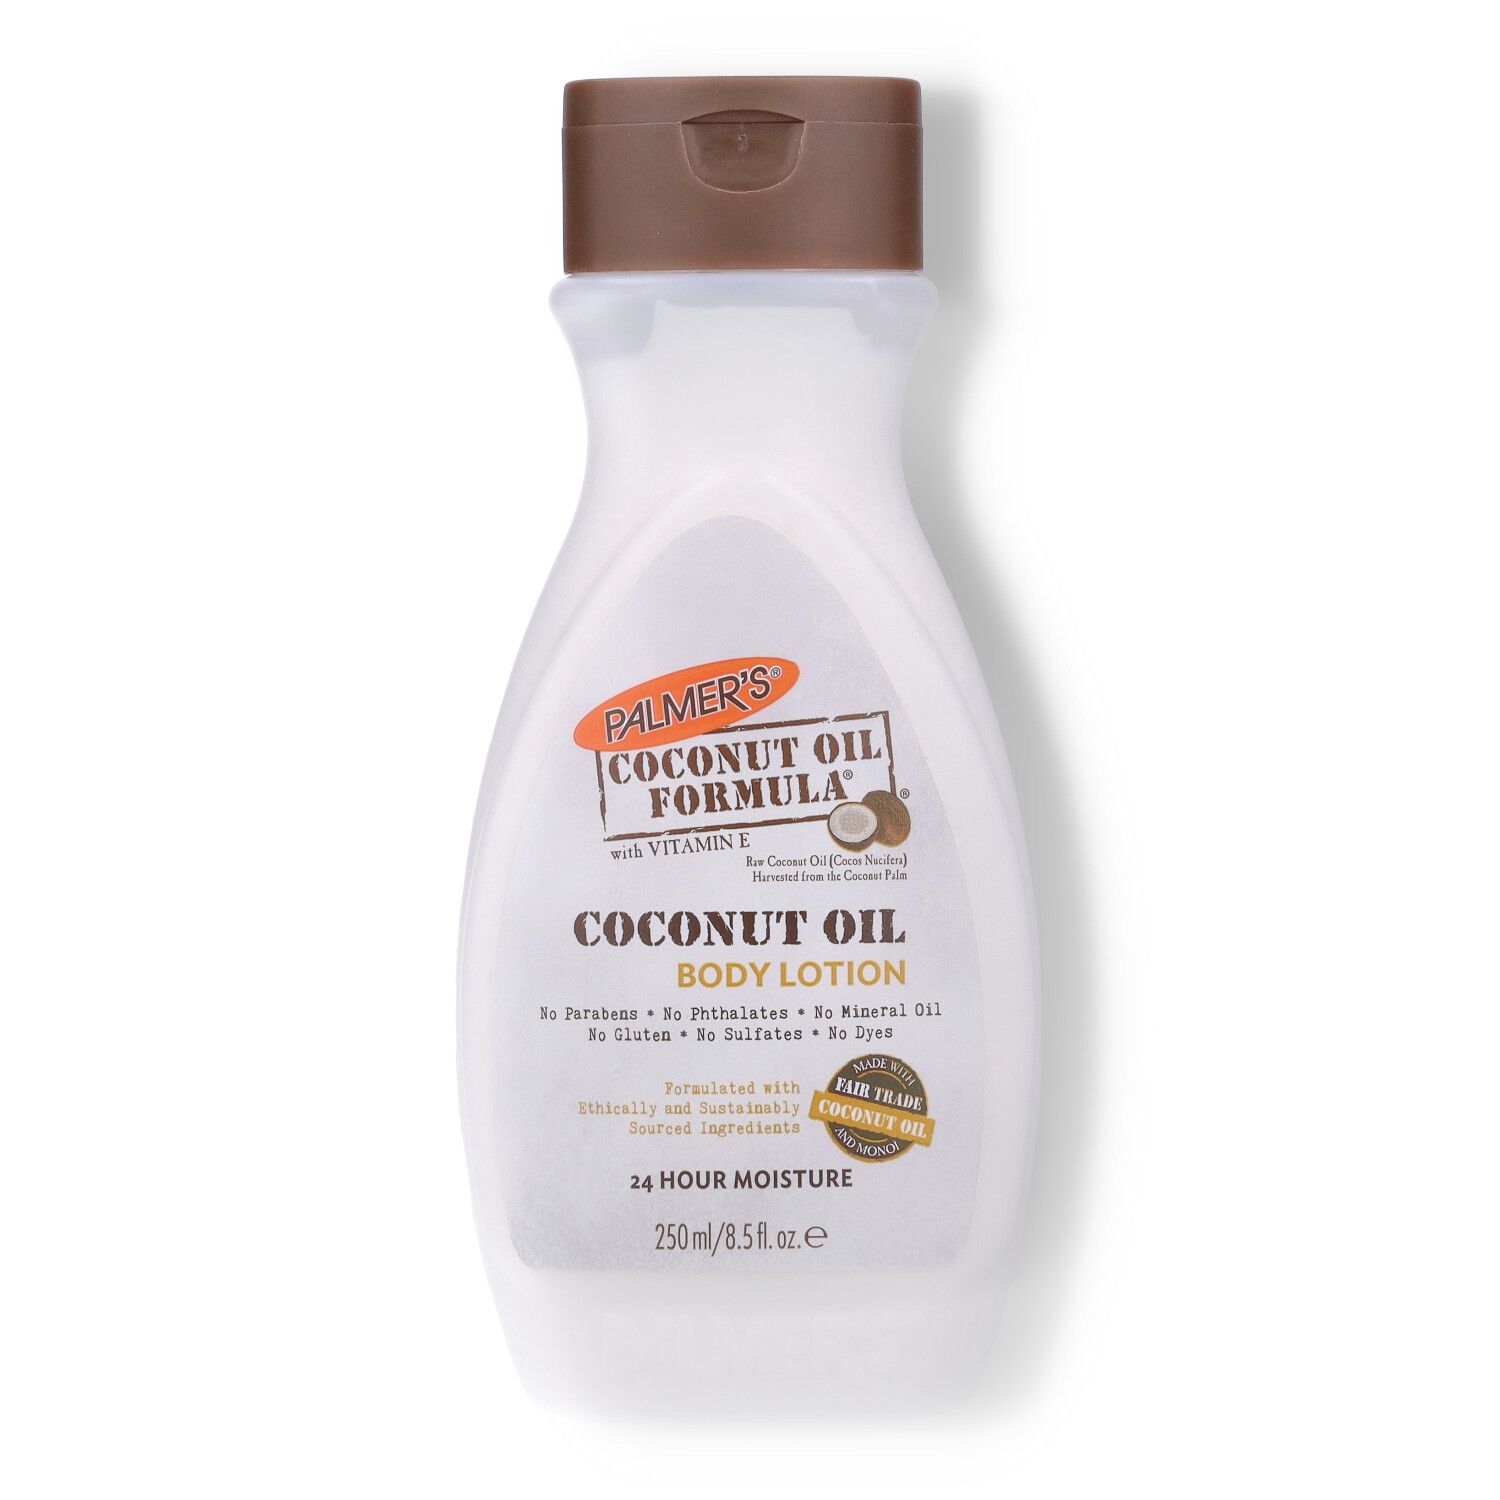 Palmer's Coconut Oil Formula Body Lotion - 250ml